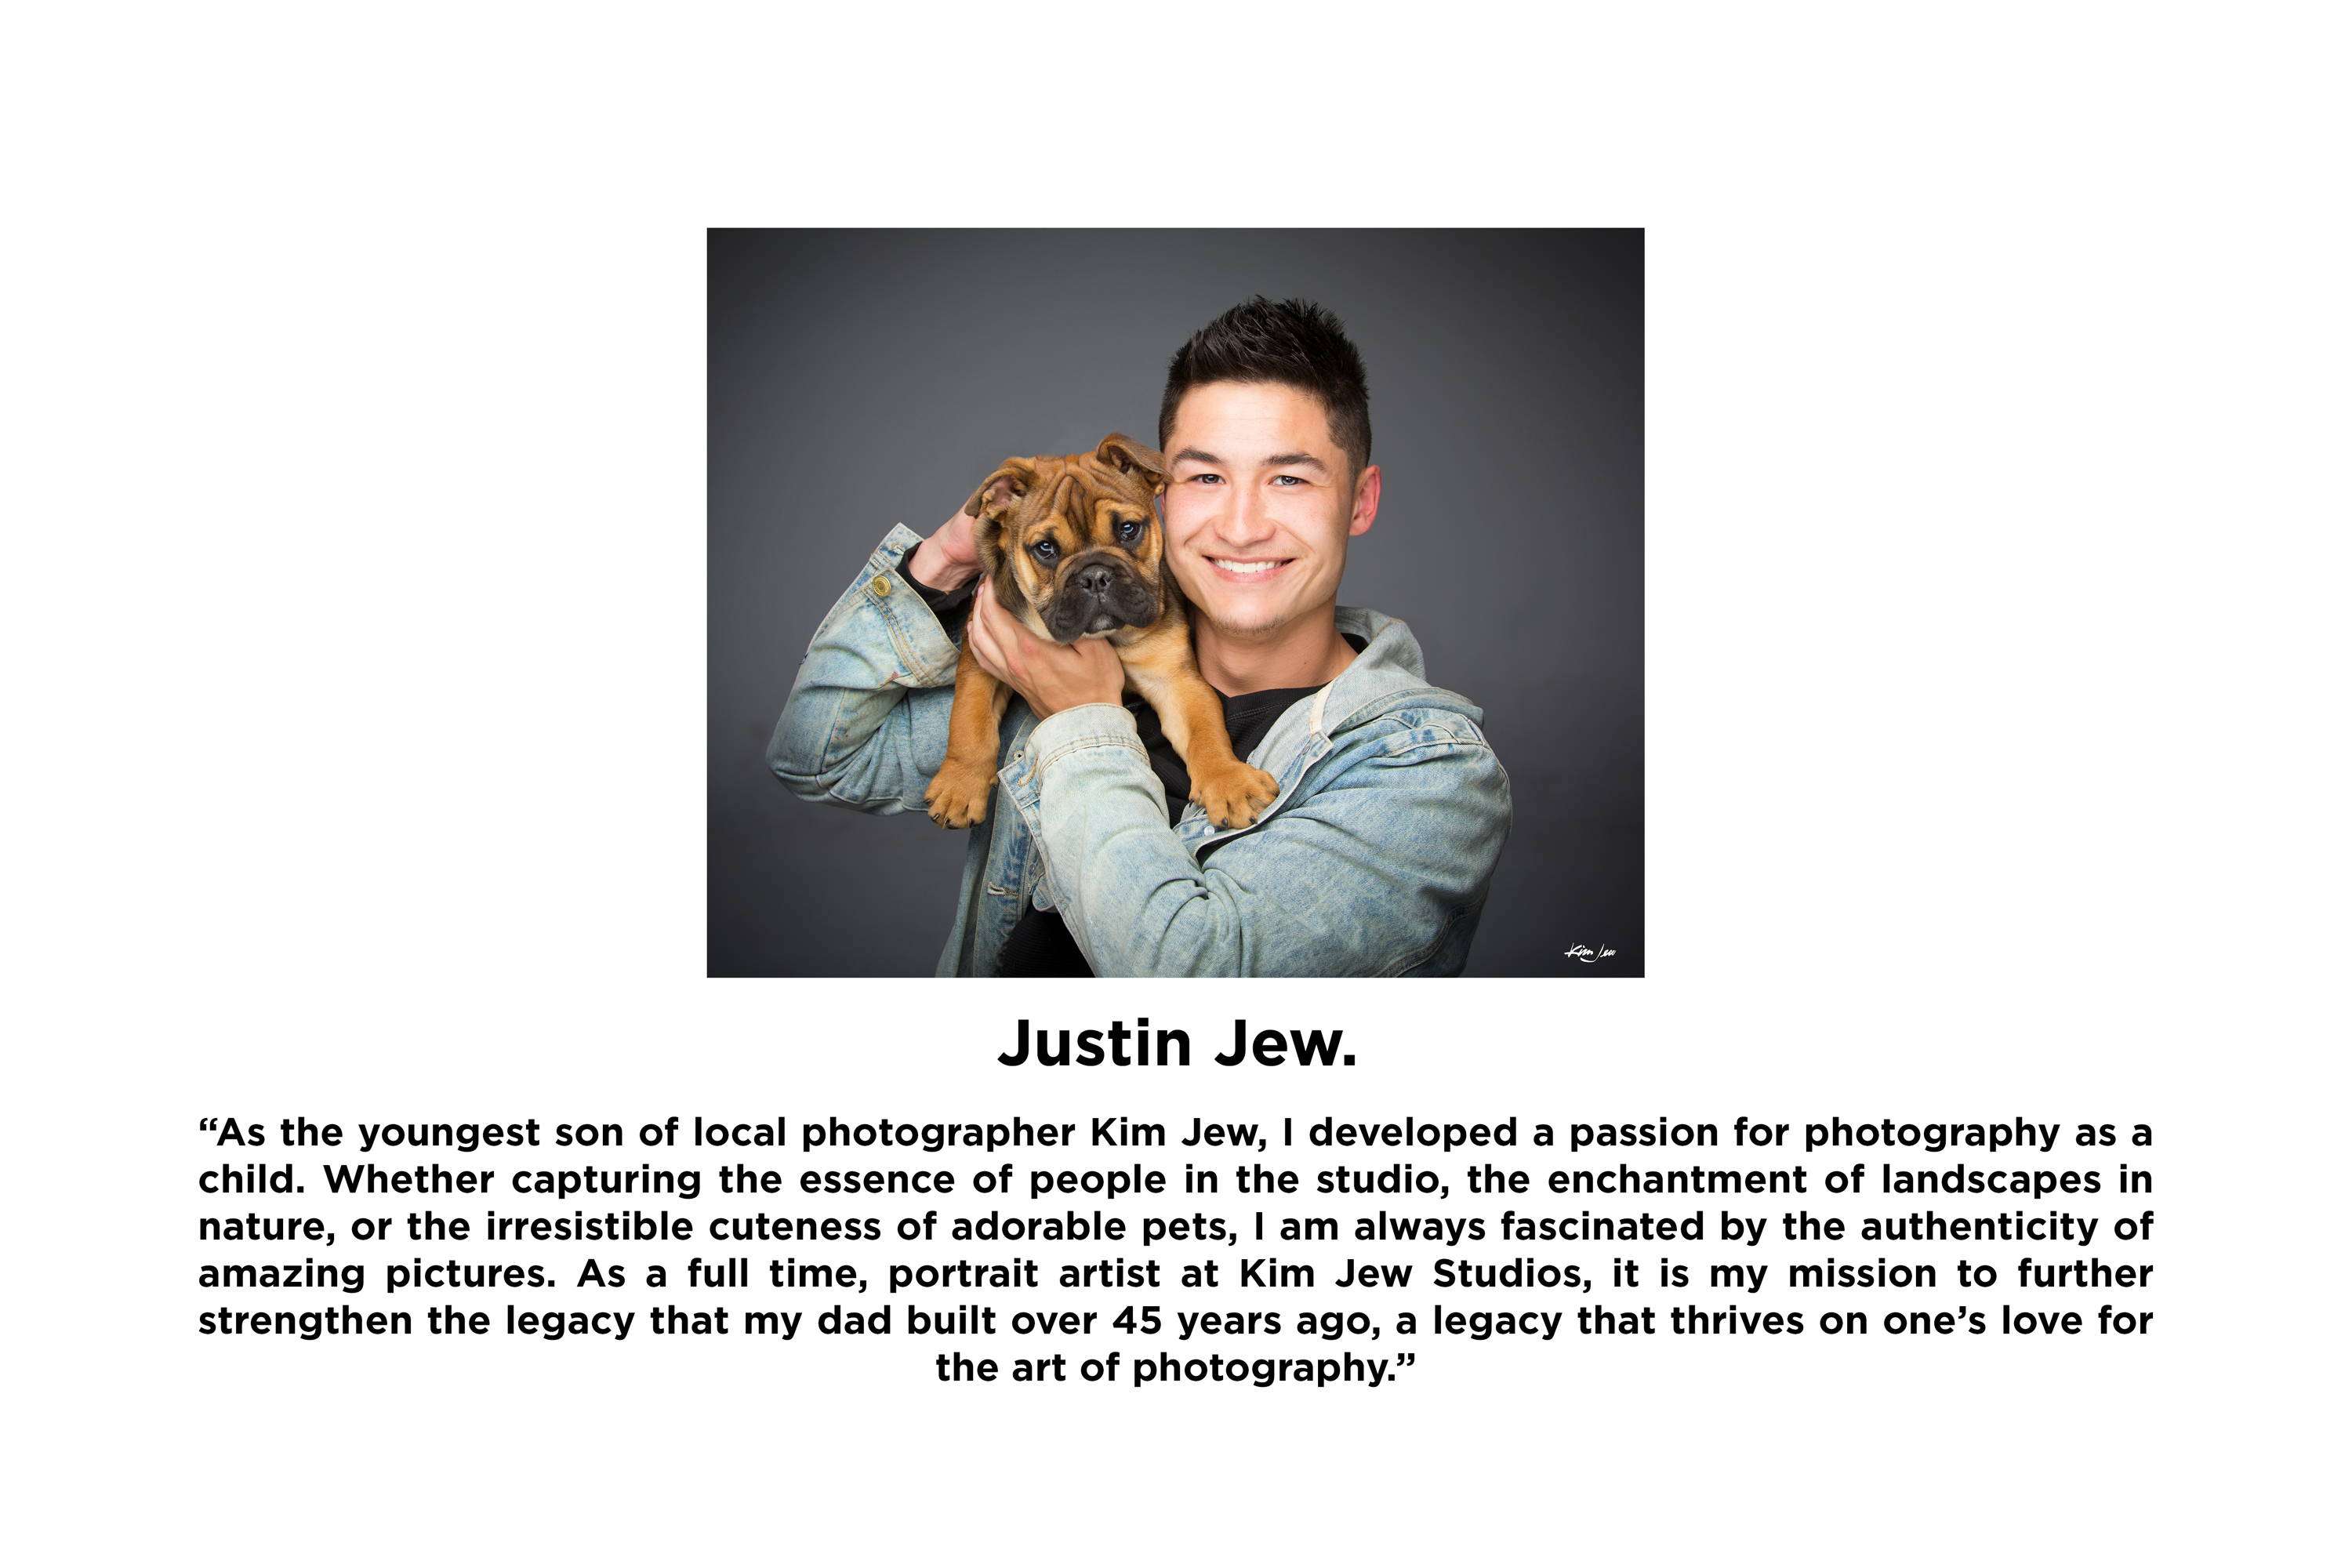 Justin Jew - Portrait Artist at Kim Jew - Photography Studio Albuquerque